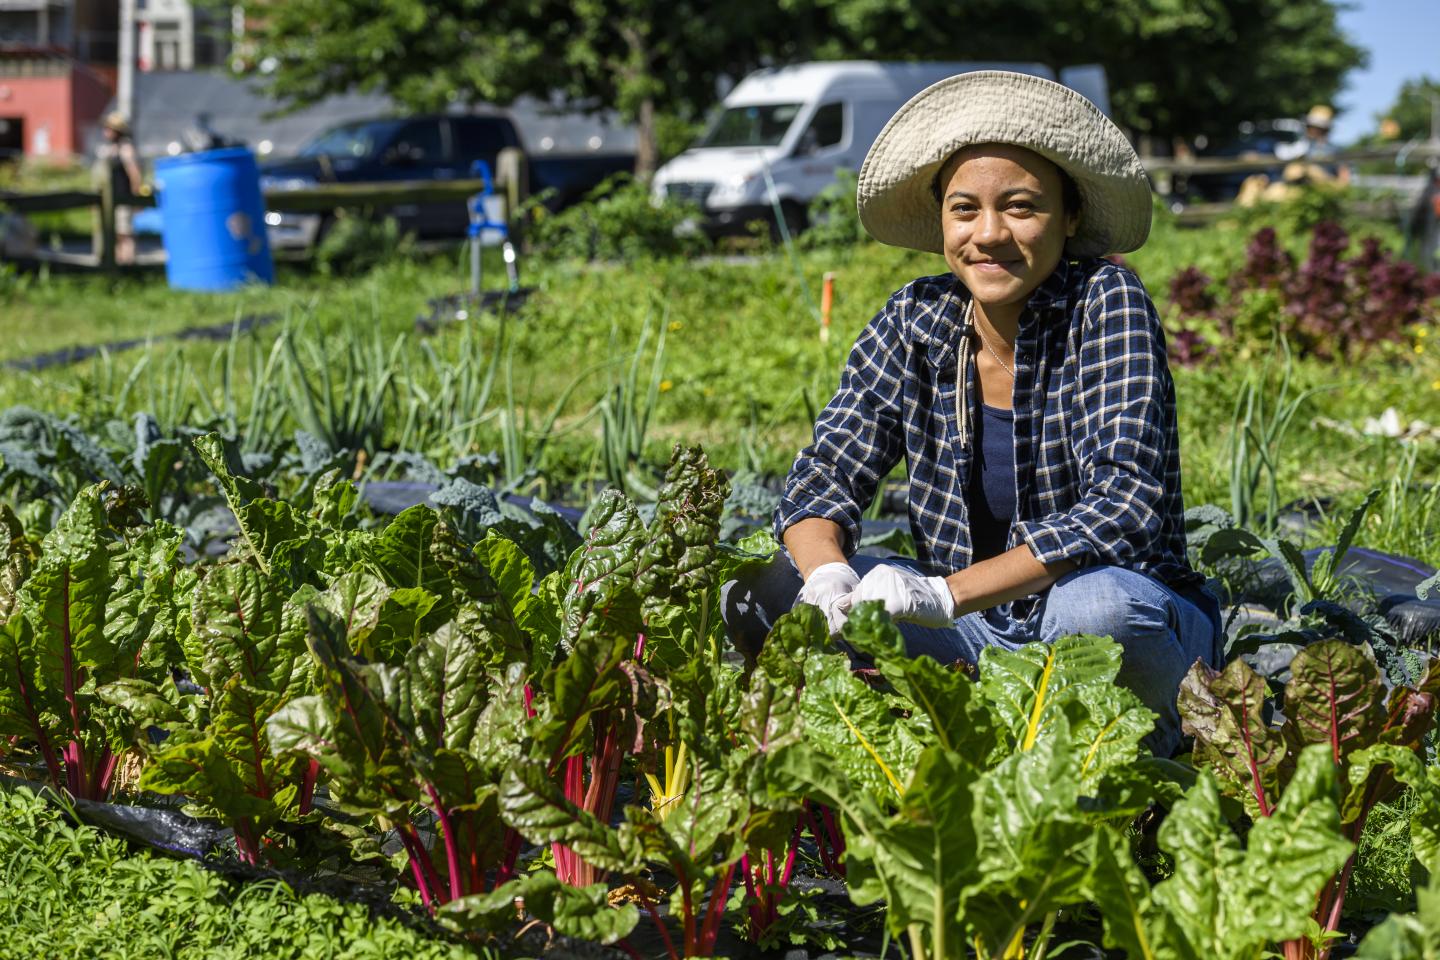 Wearing a hat, Johns Hopkins student Marisa Thomas smiles next to a vegetable gardeb